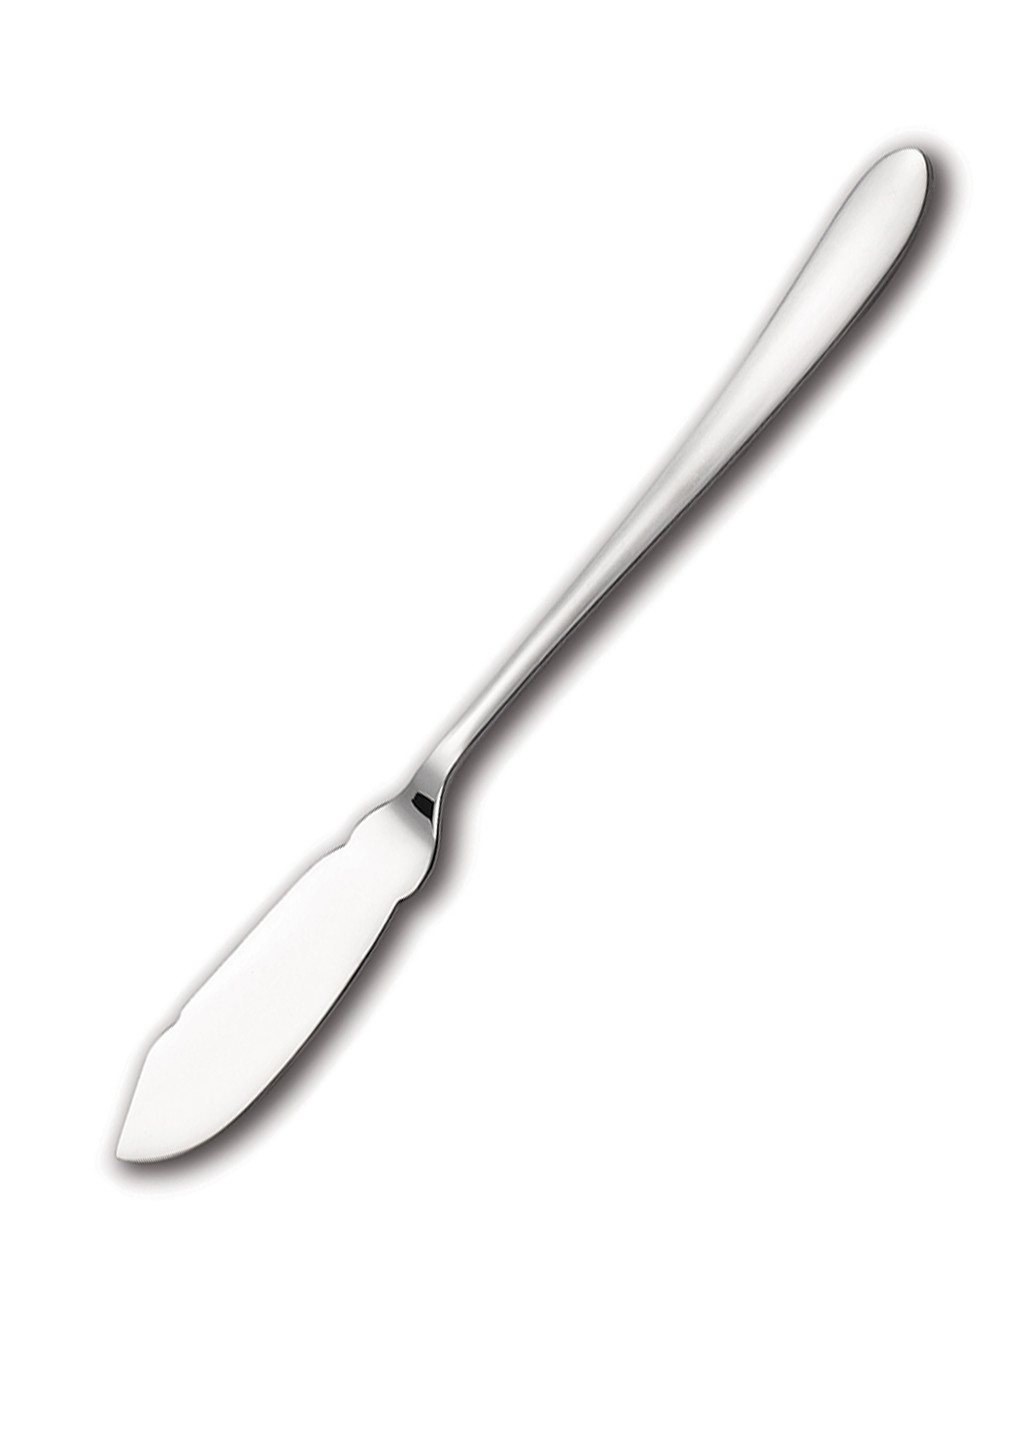 Набор ножей для рыбы (2 пр.) Helfer белые, нержавеющая сталь